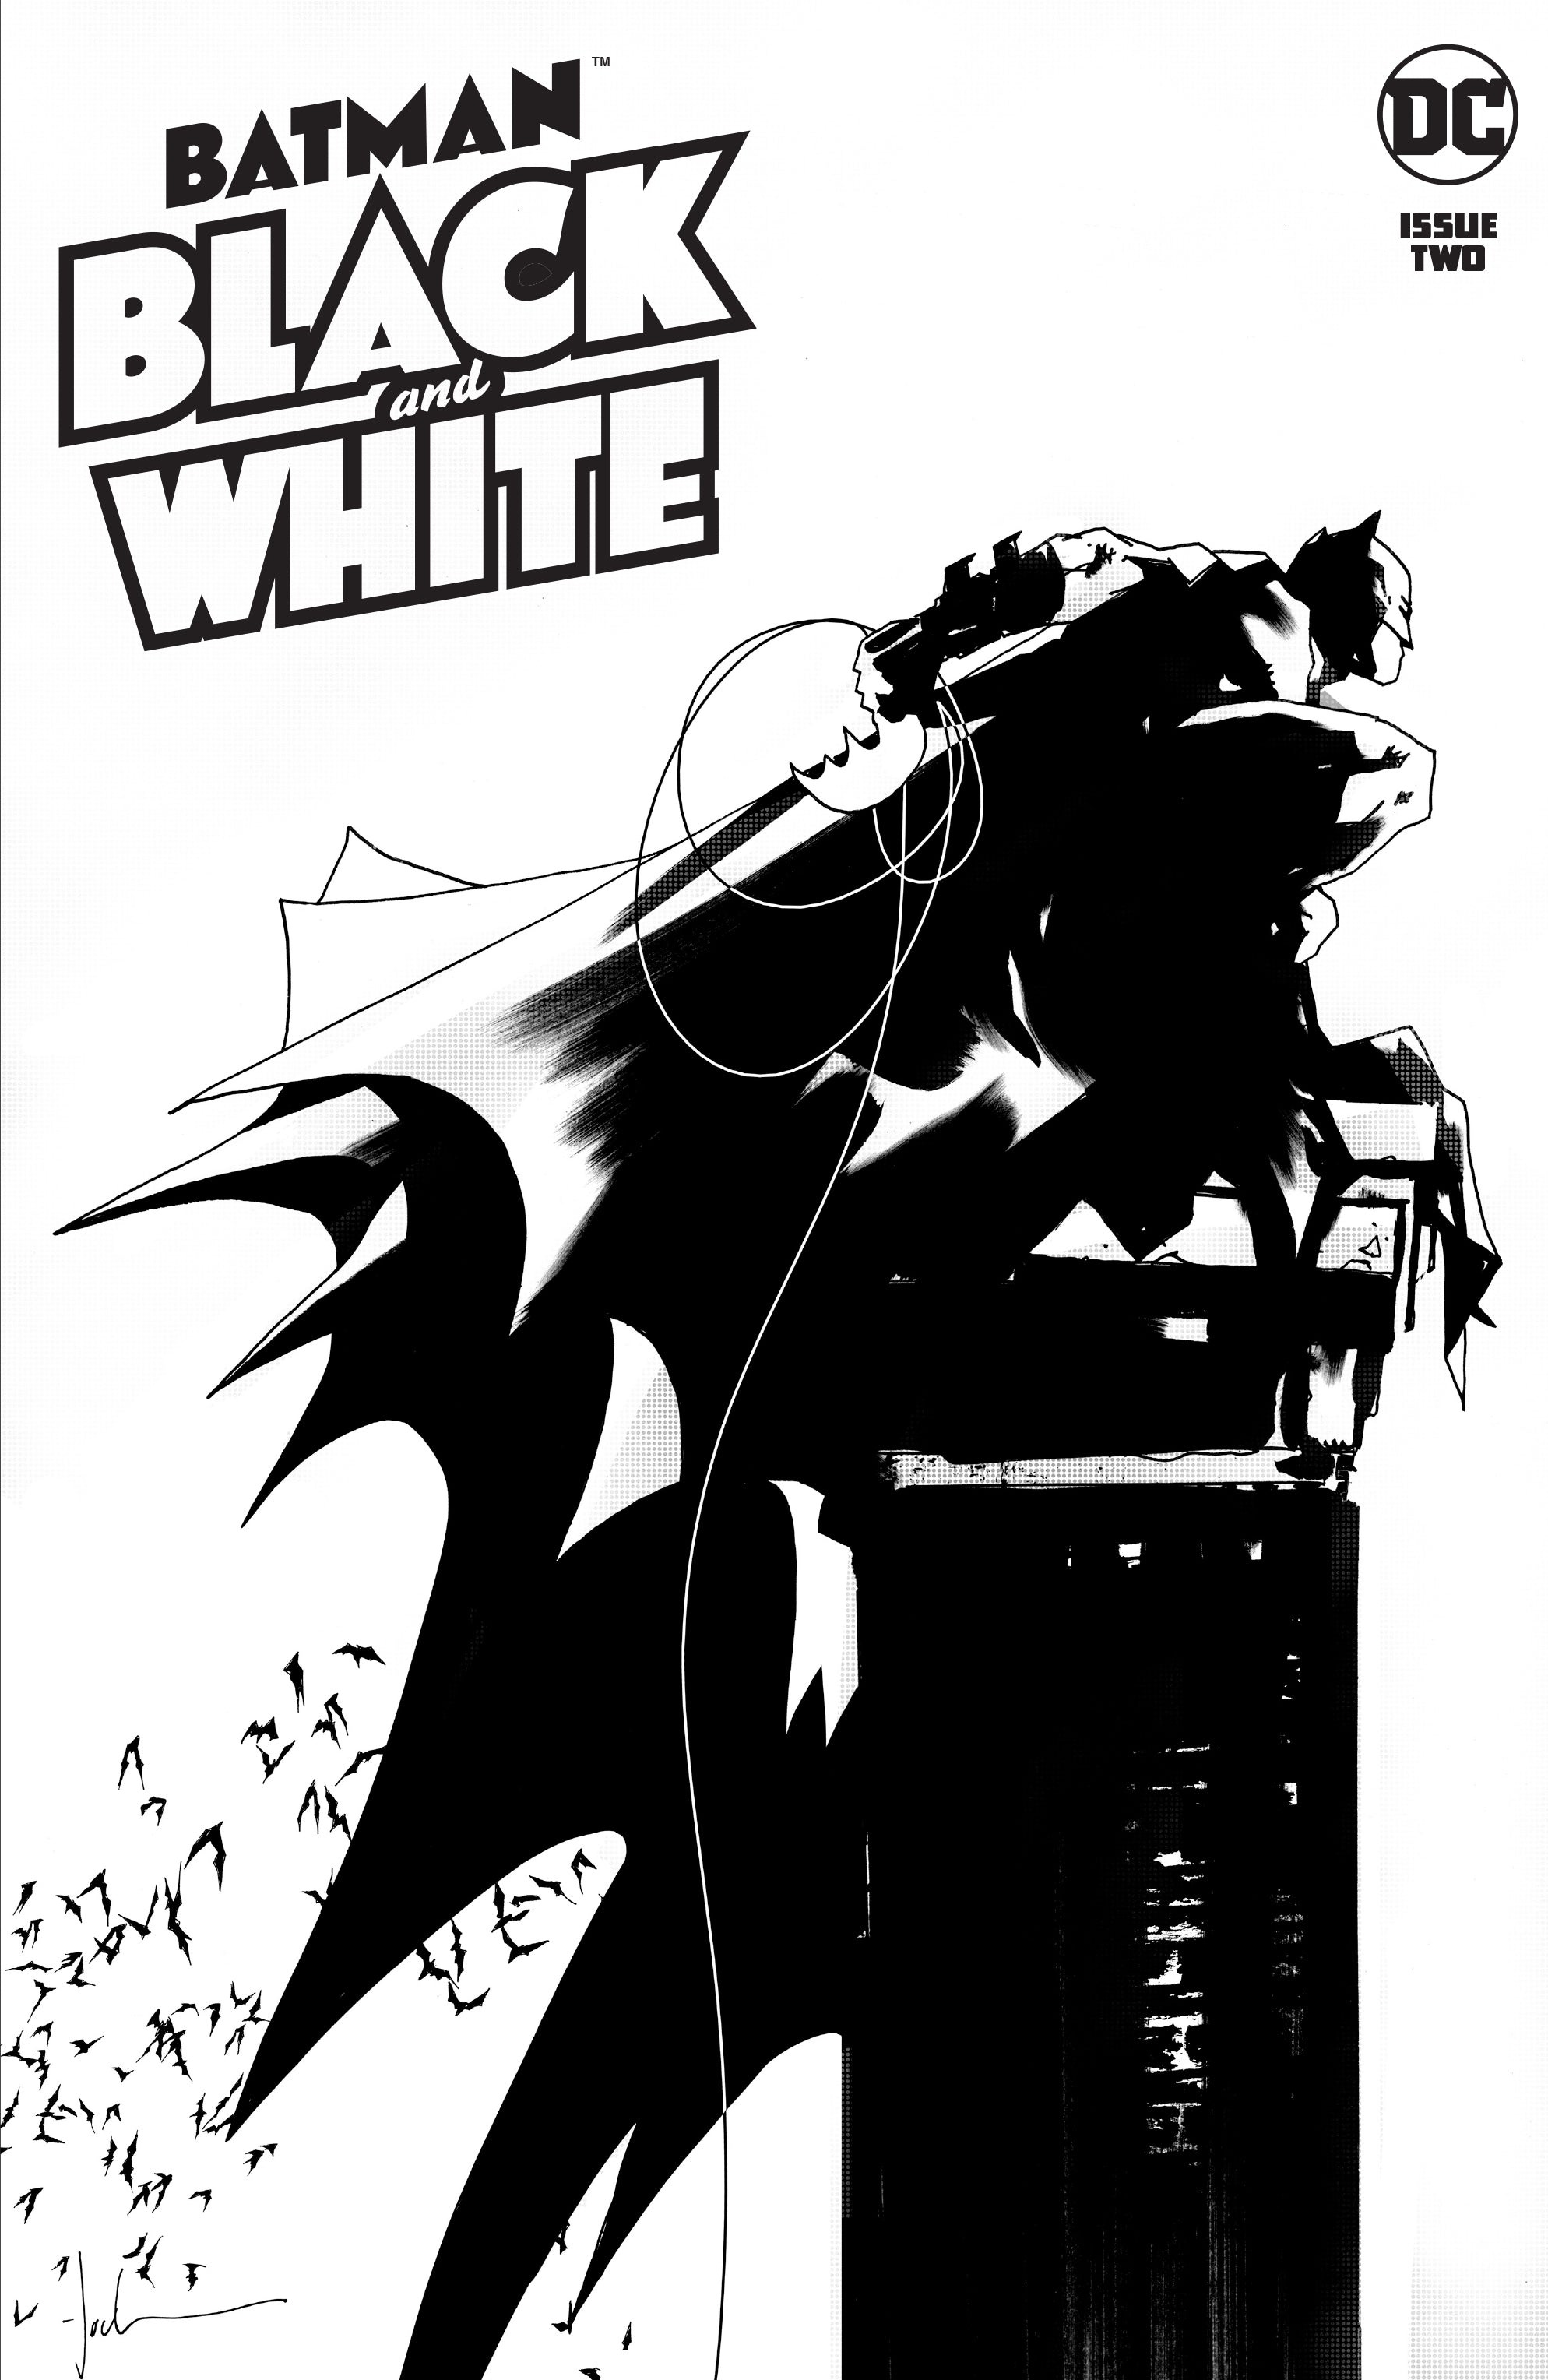 BATMAN BLACK AND WHITE #2 (OF 6) CVR A JOCK